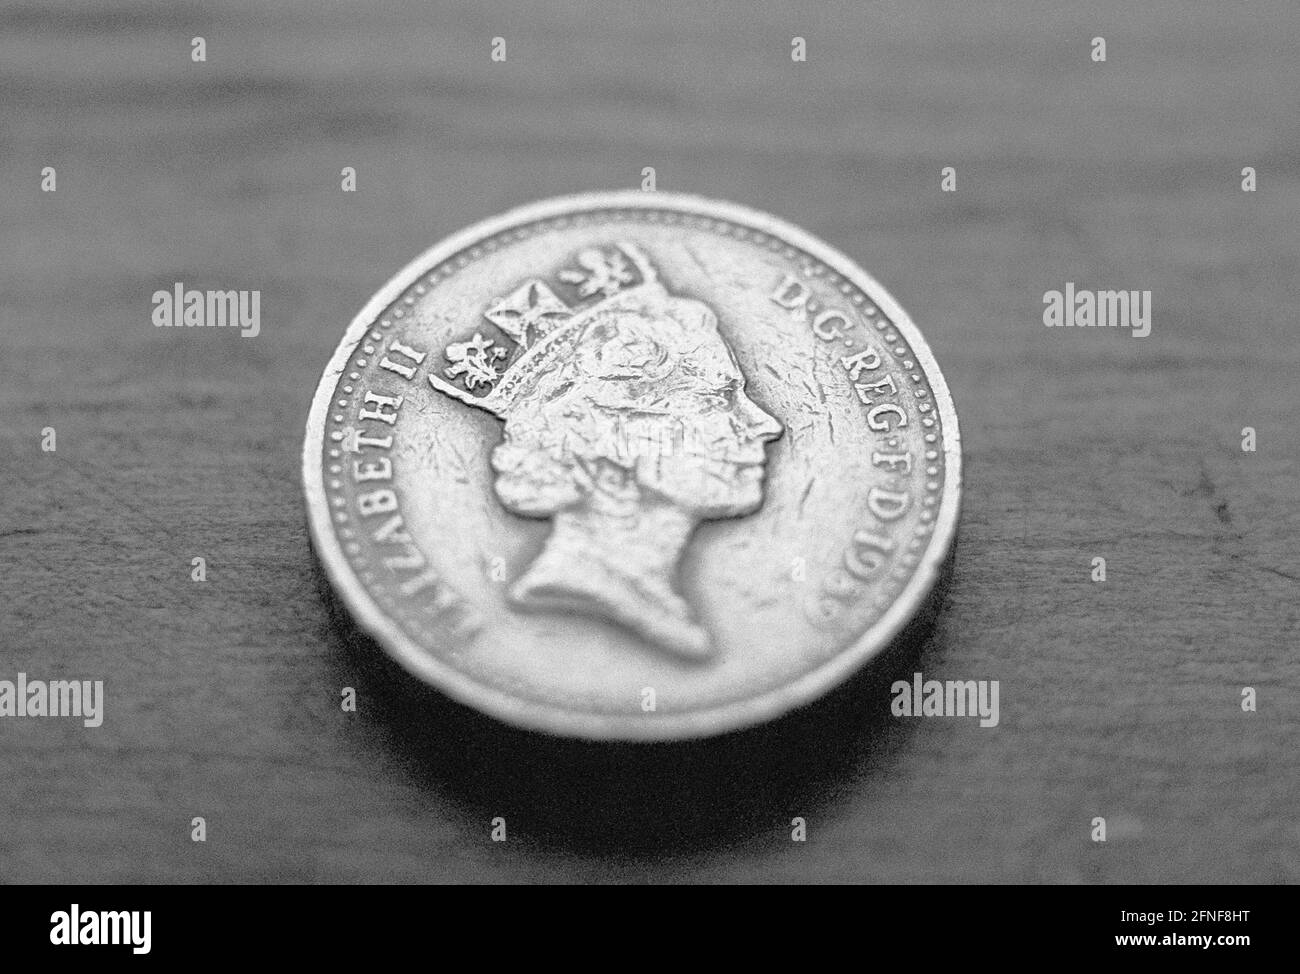 English coinage:1 pound sterling. [automated translation] Stock Photo